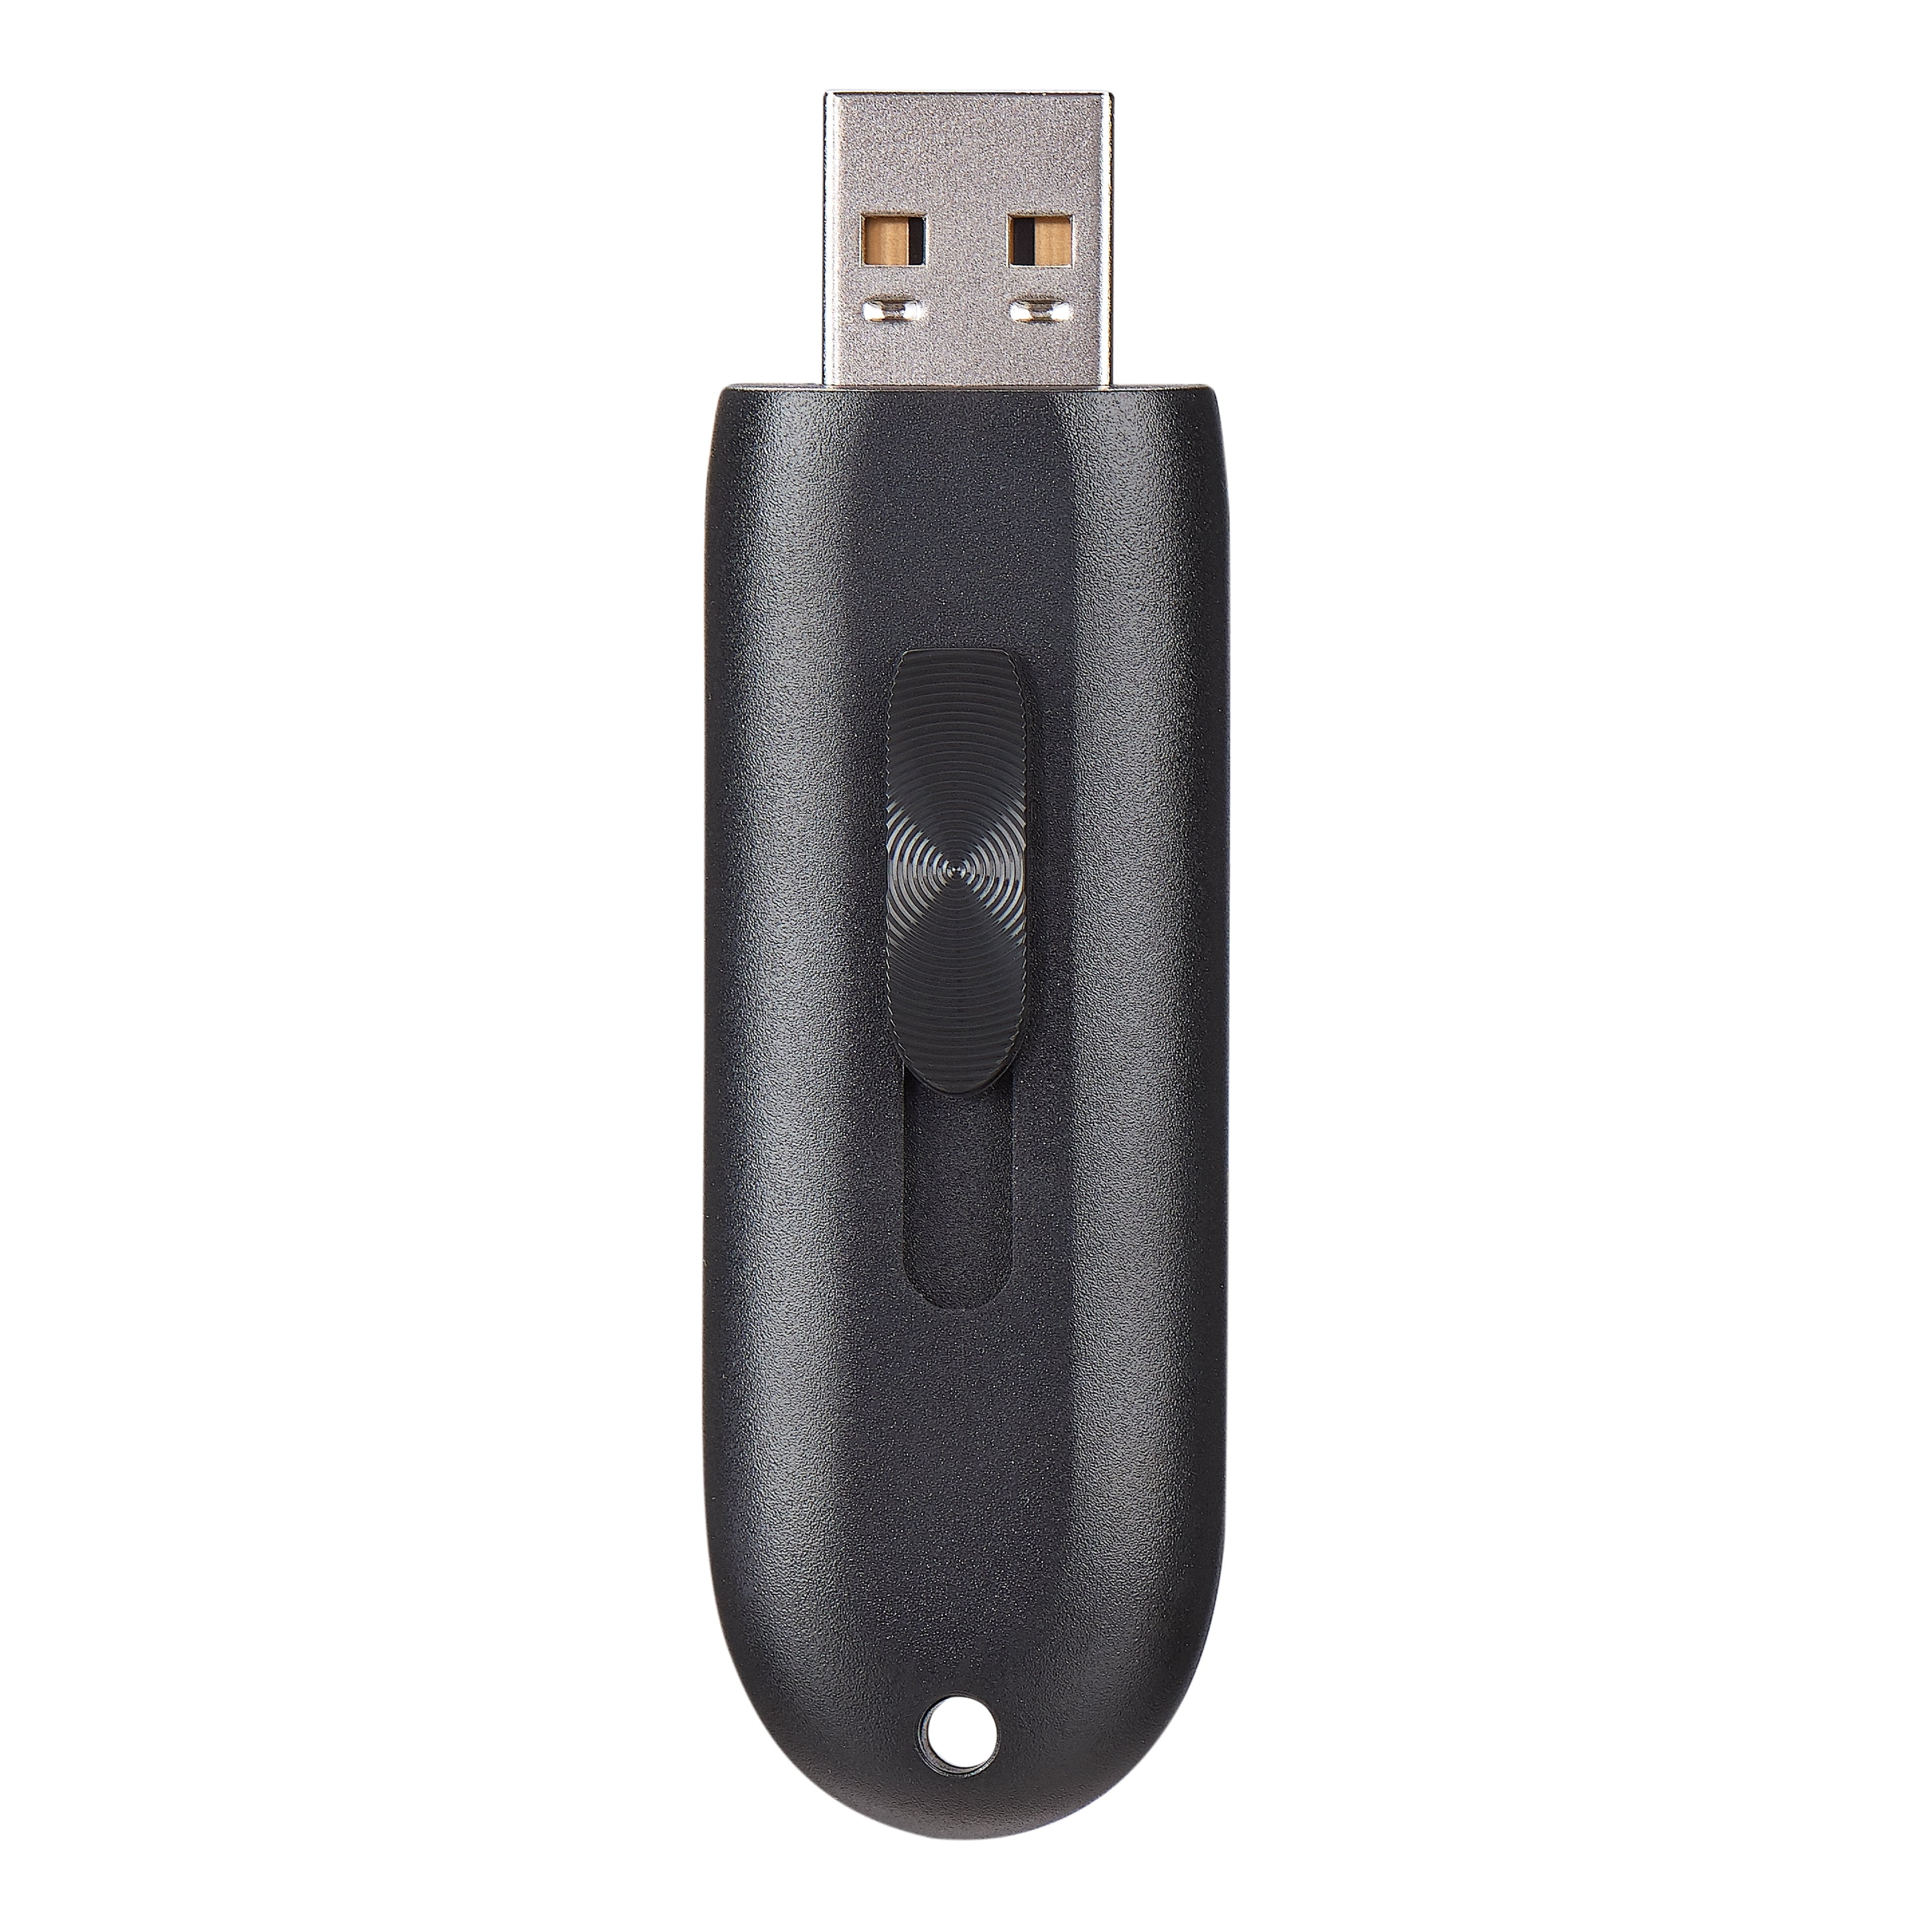 onn. USB 2.0 Flash Drive for Tablets and 64 GB Capacity Walmart.com